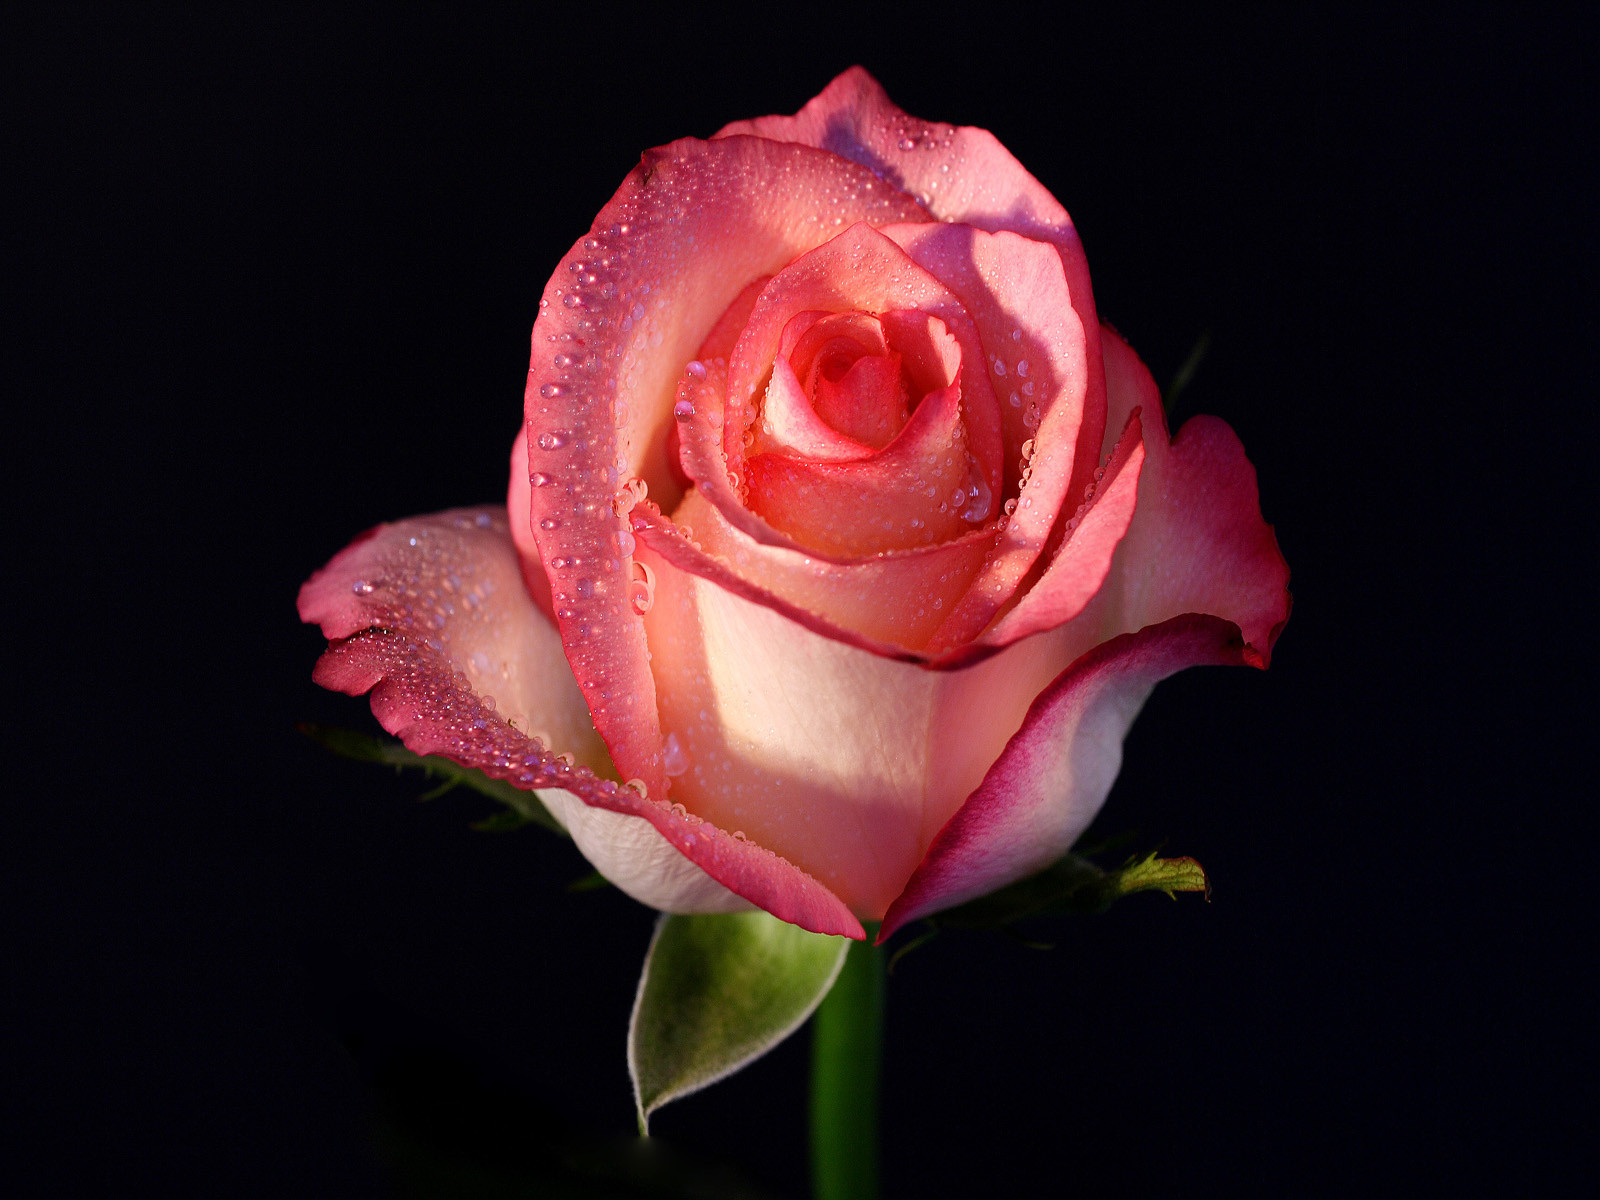  [urlhttpwwwtumblr18comsingle pink rose with black background